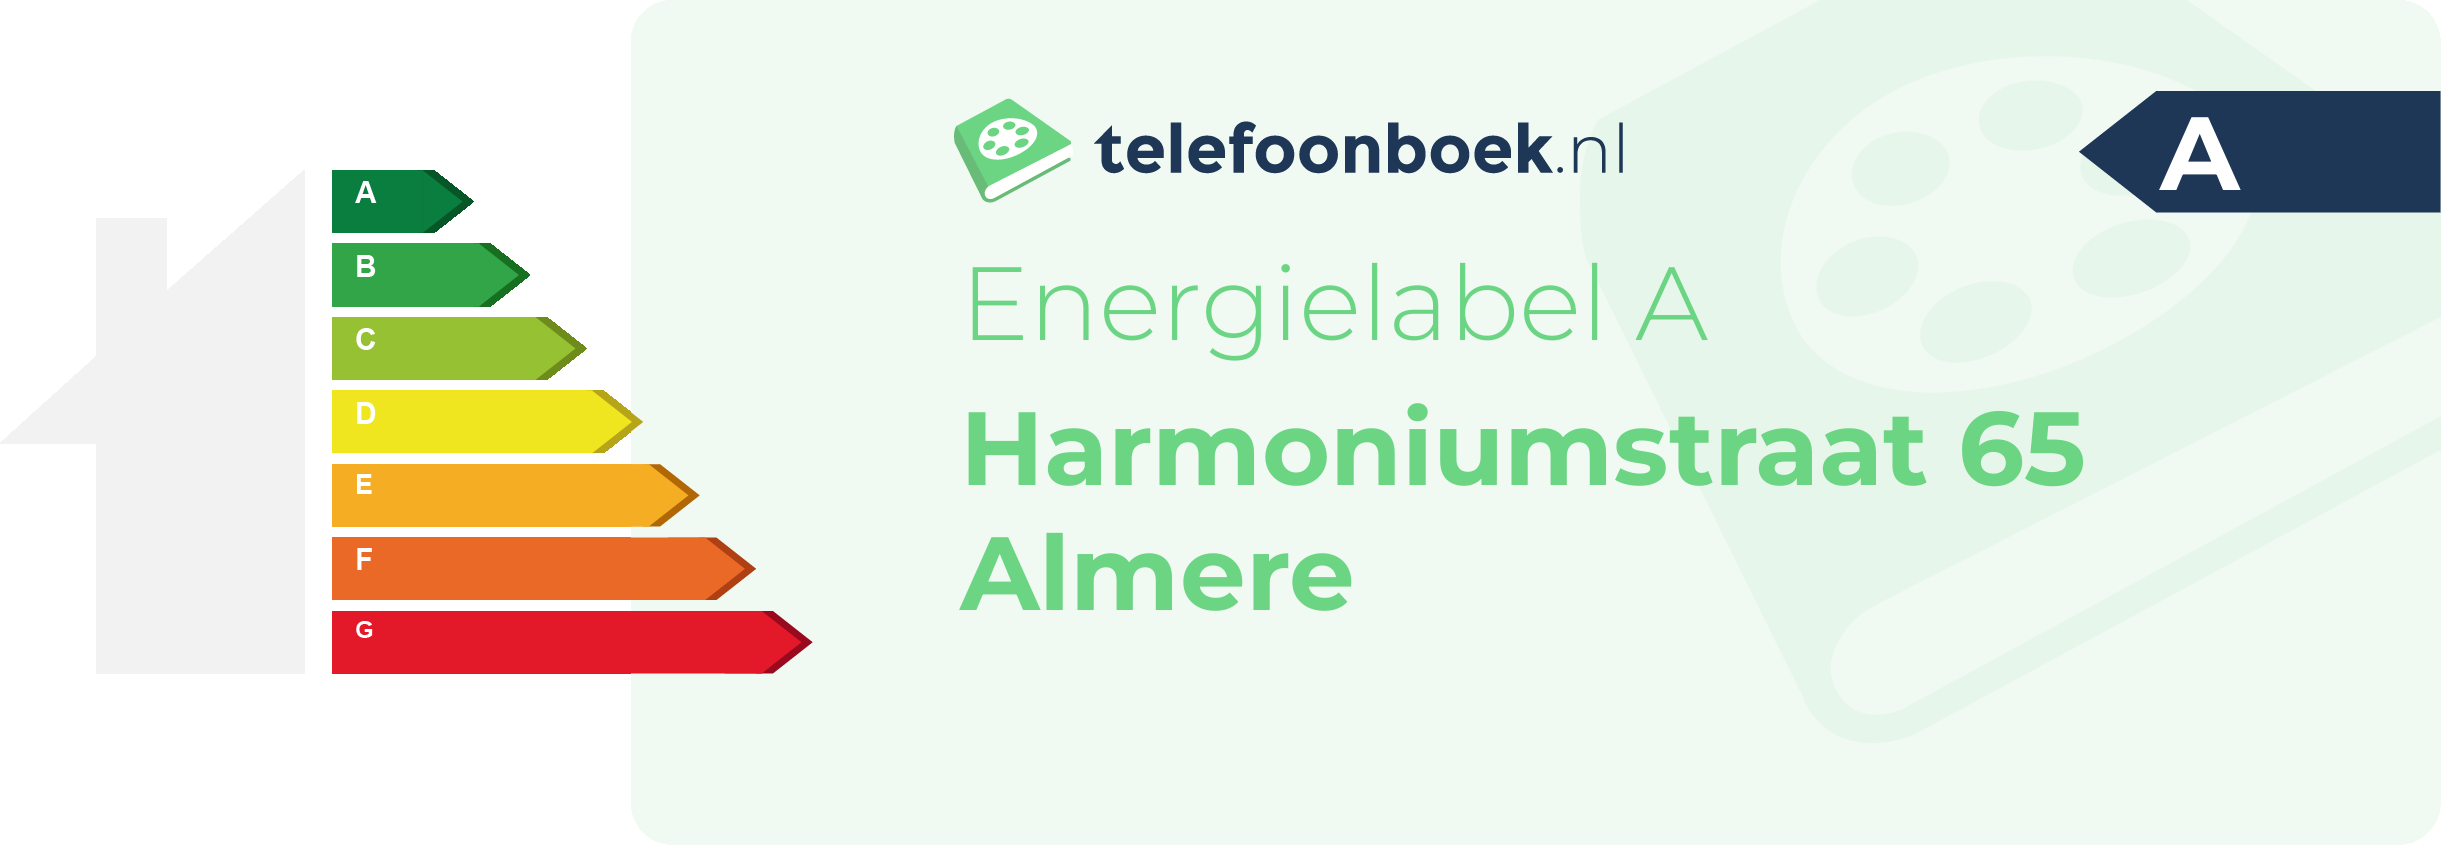 Energielabel Harmoniumstraat 65 Almere